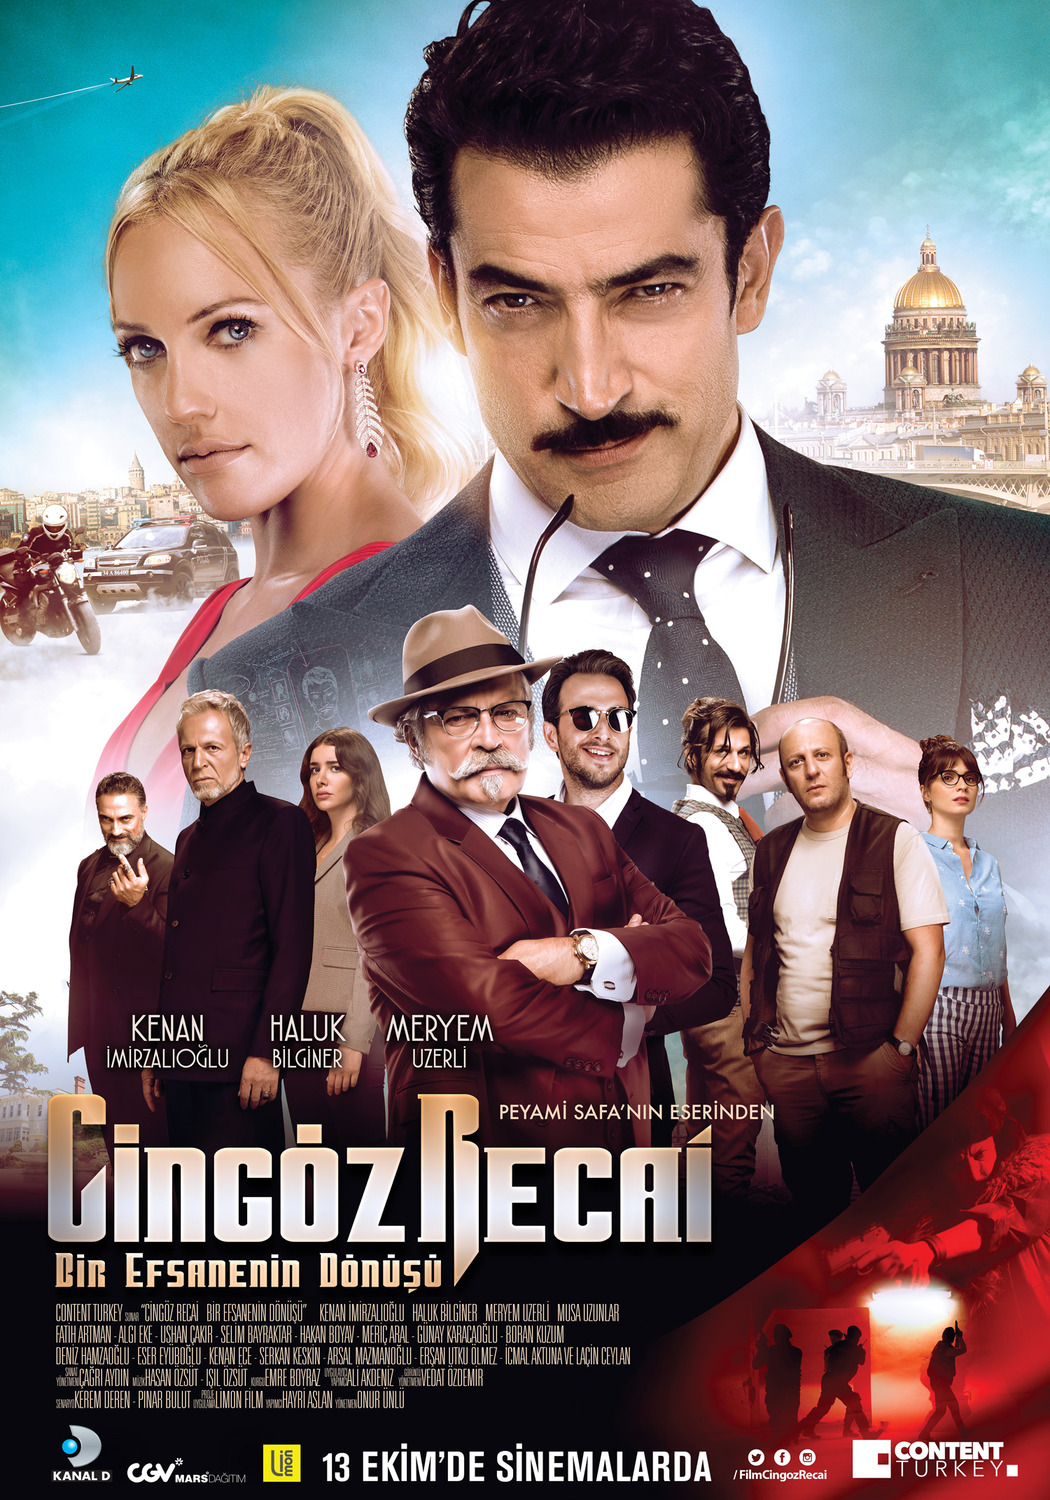 Extra Large Movie Poster Image for Cingöz Recai (#1 of 11)